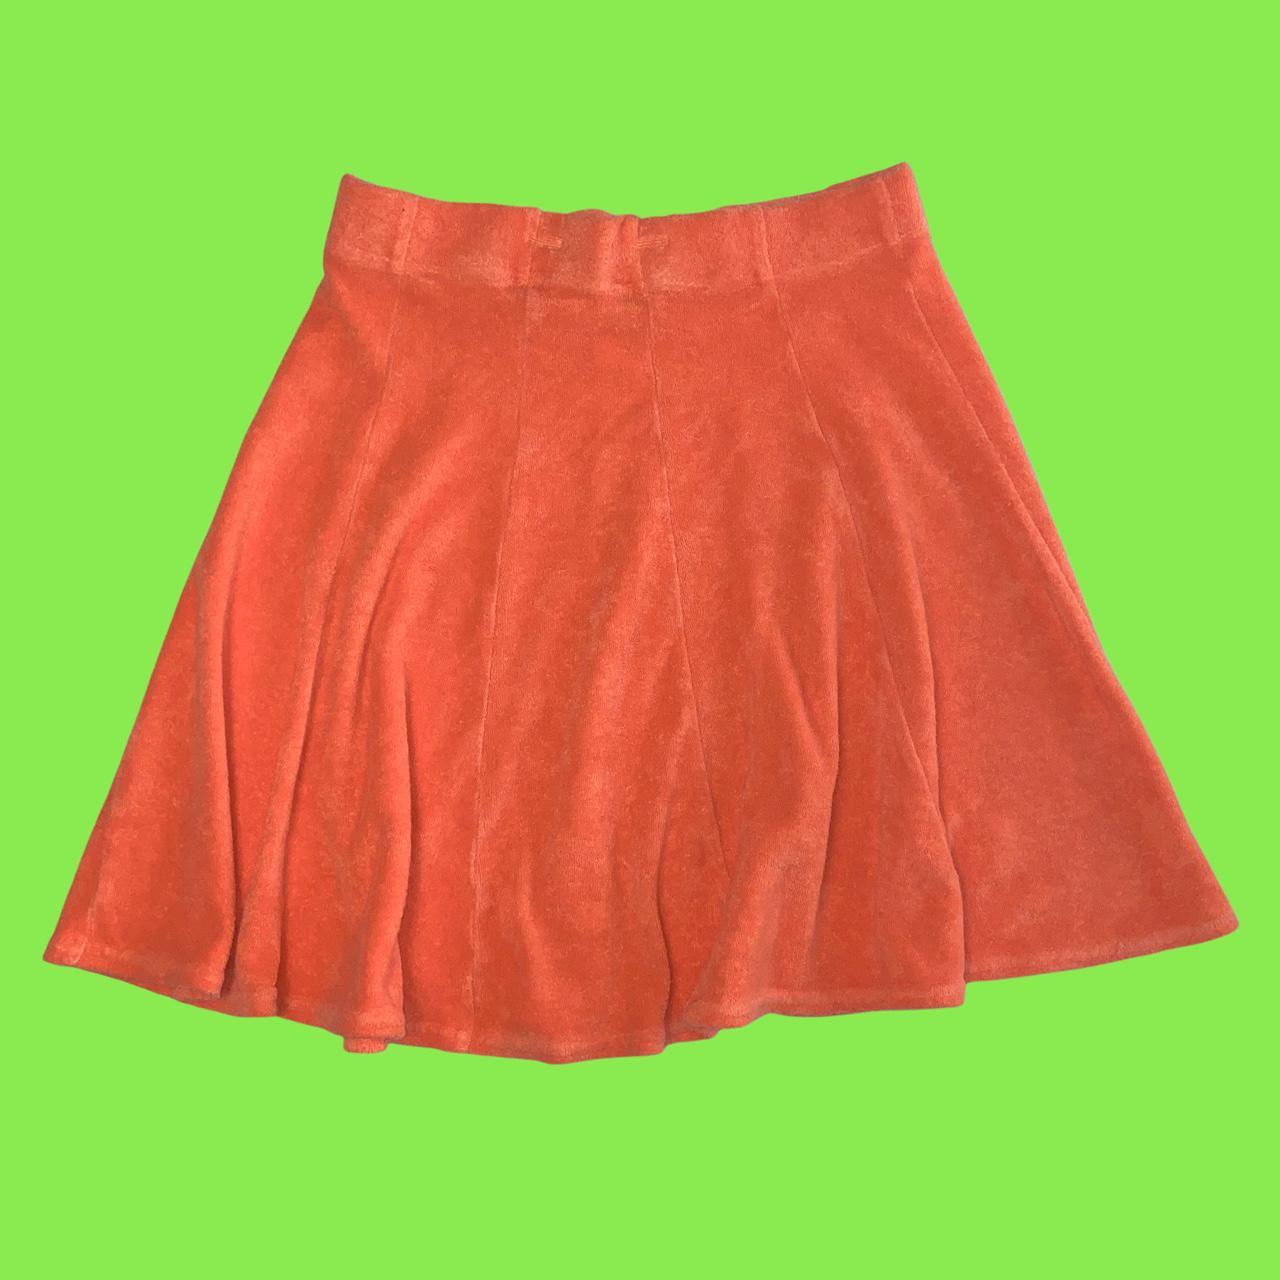 Hard Tail Women's Orange and Pink Skirt (2)